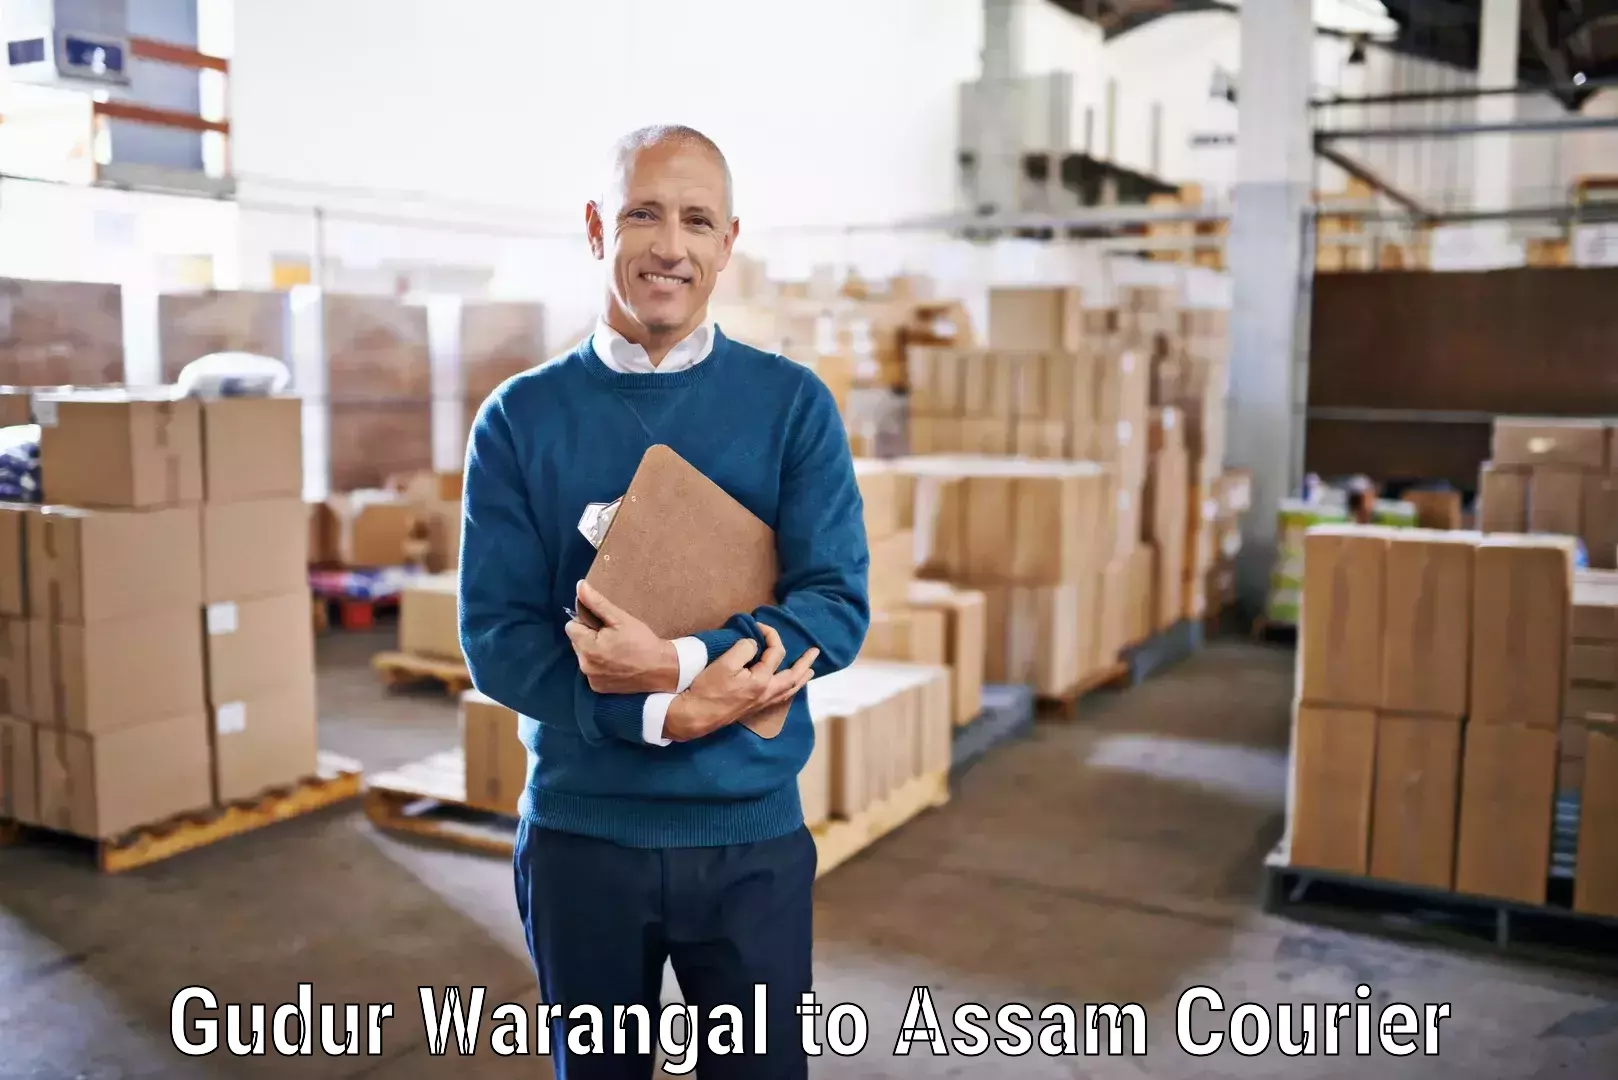 On-call courier service Gudur Warangal to Majuli